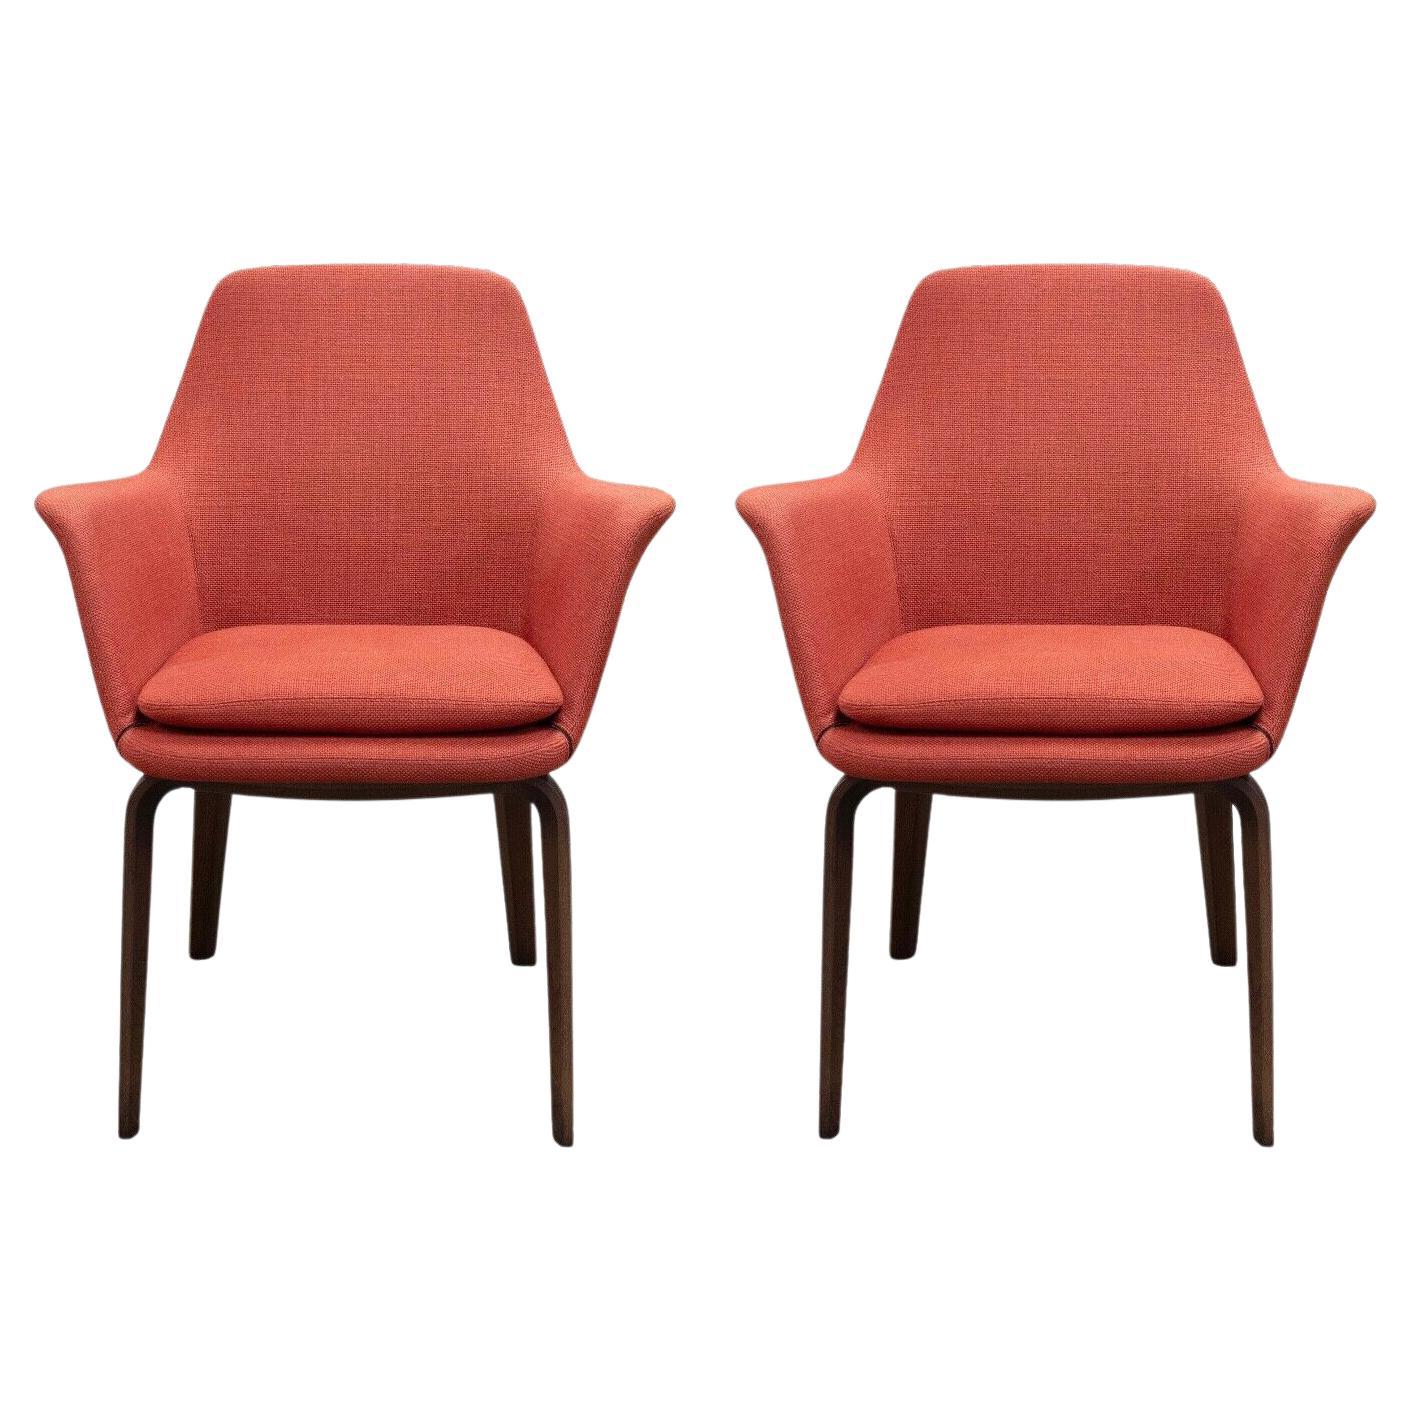 Pair of Minotti "York" Red Little Arm Chair Contemporary Modern Rodolfo Dordoni For Sale